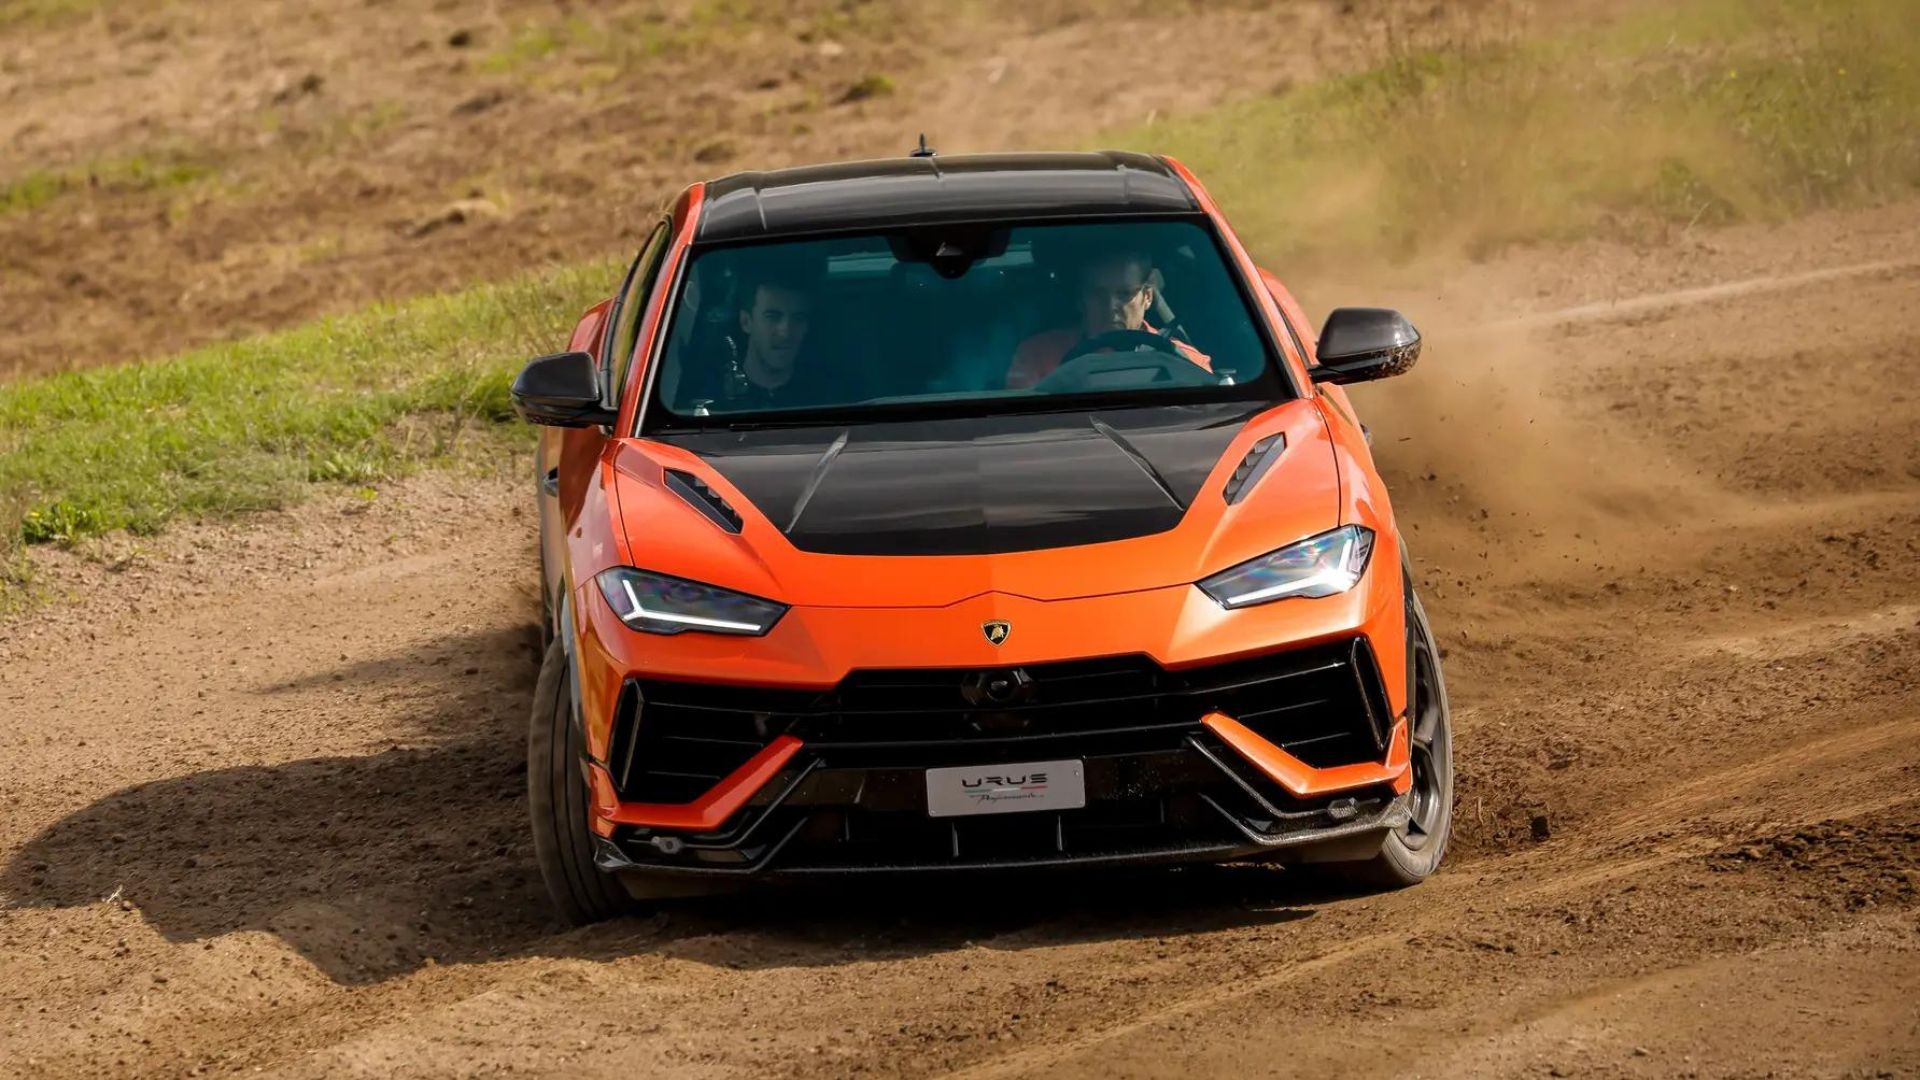 Lamborghini Urus Performante takes on the dirt